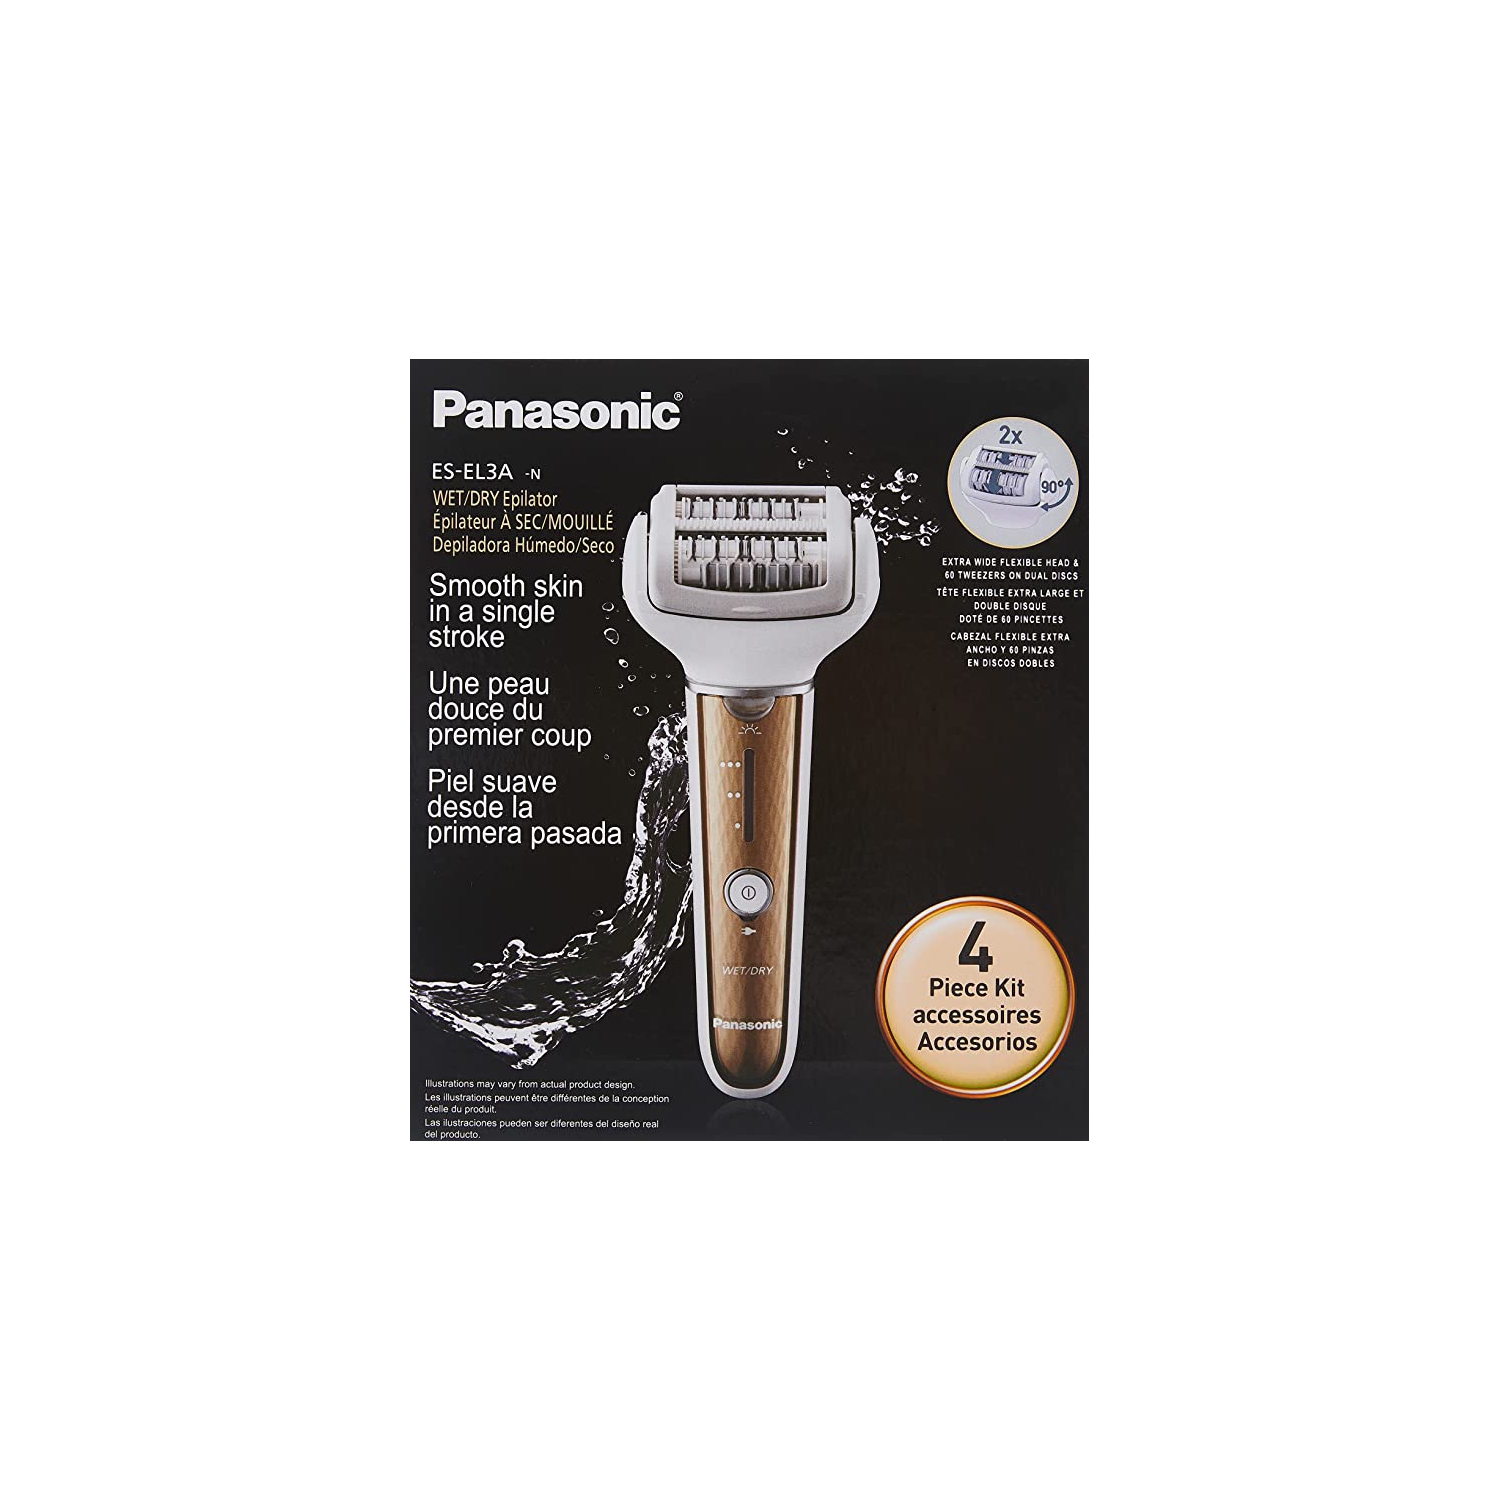 Panasonic ES-EL3A | Cordless Wet/dry Epilator for Women- 4-pc Kit Accessories- Gold- New